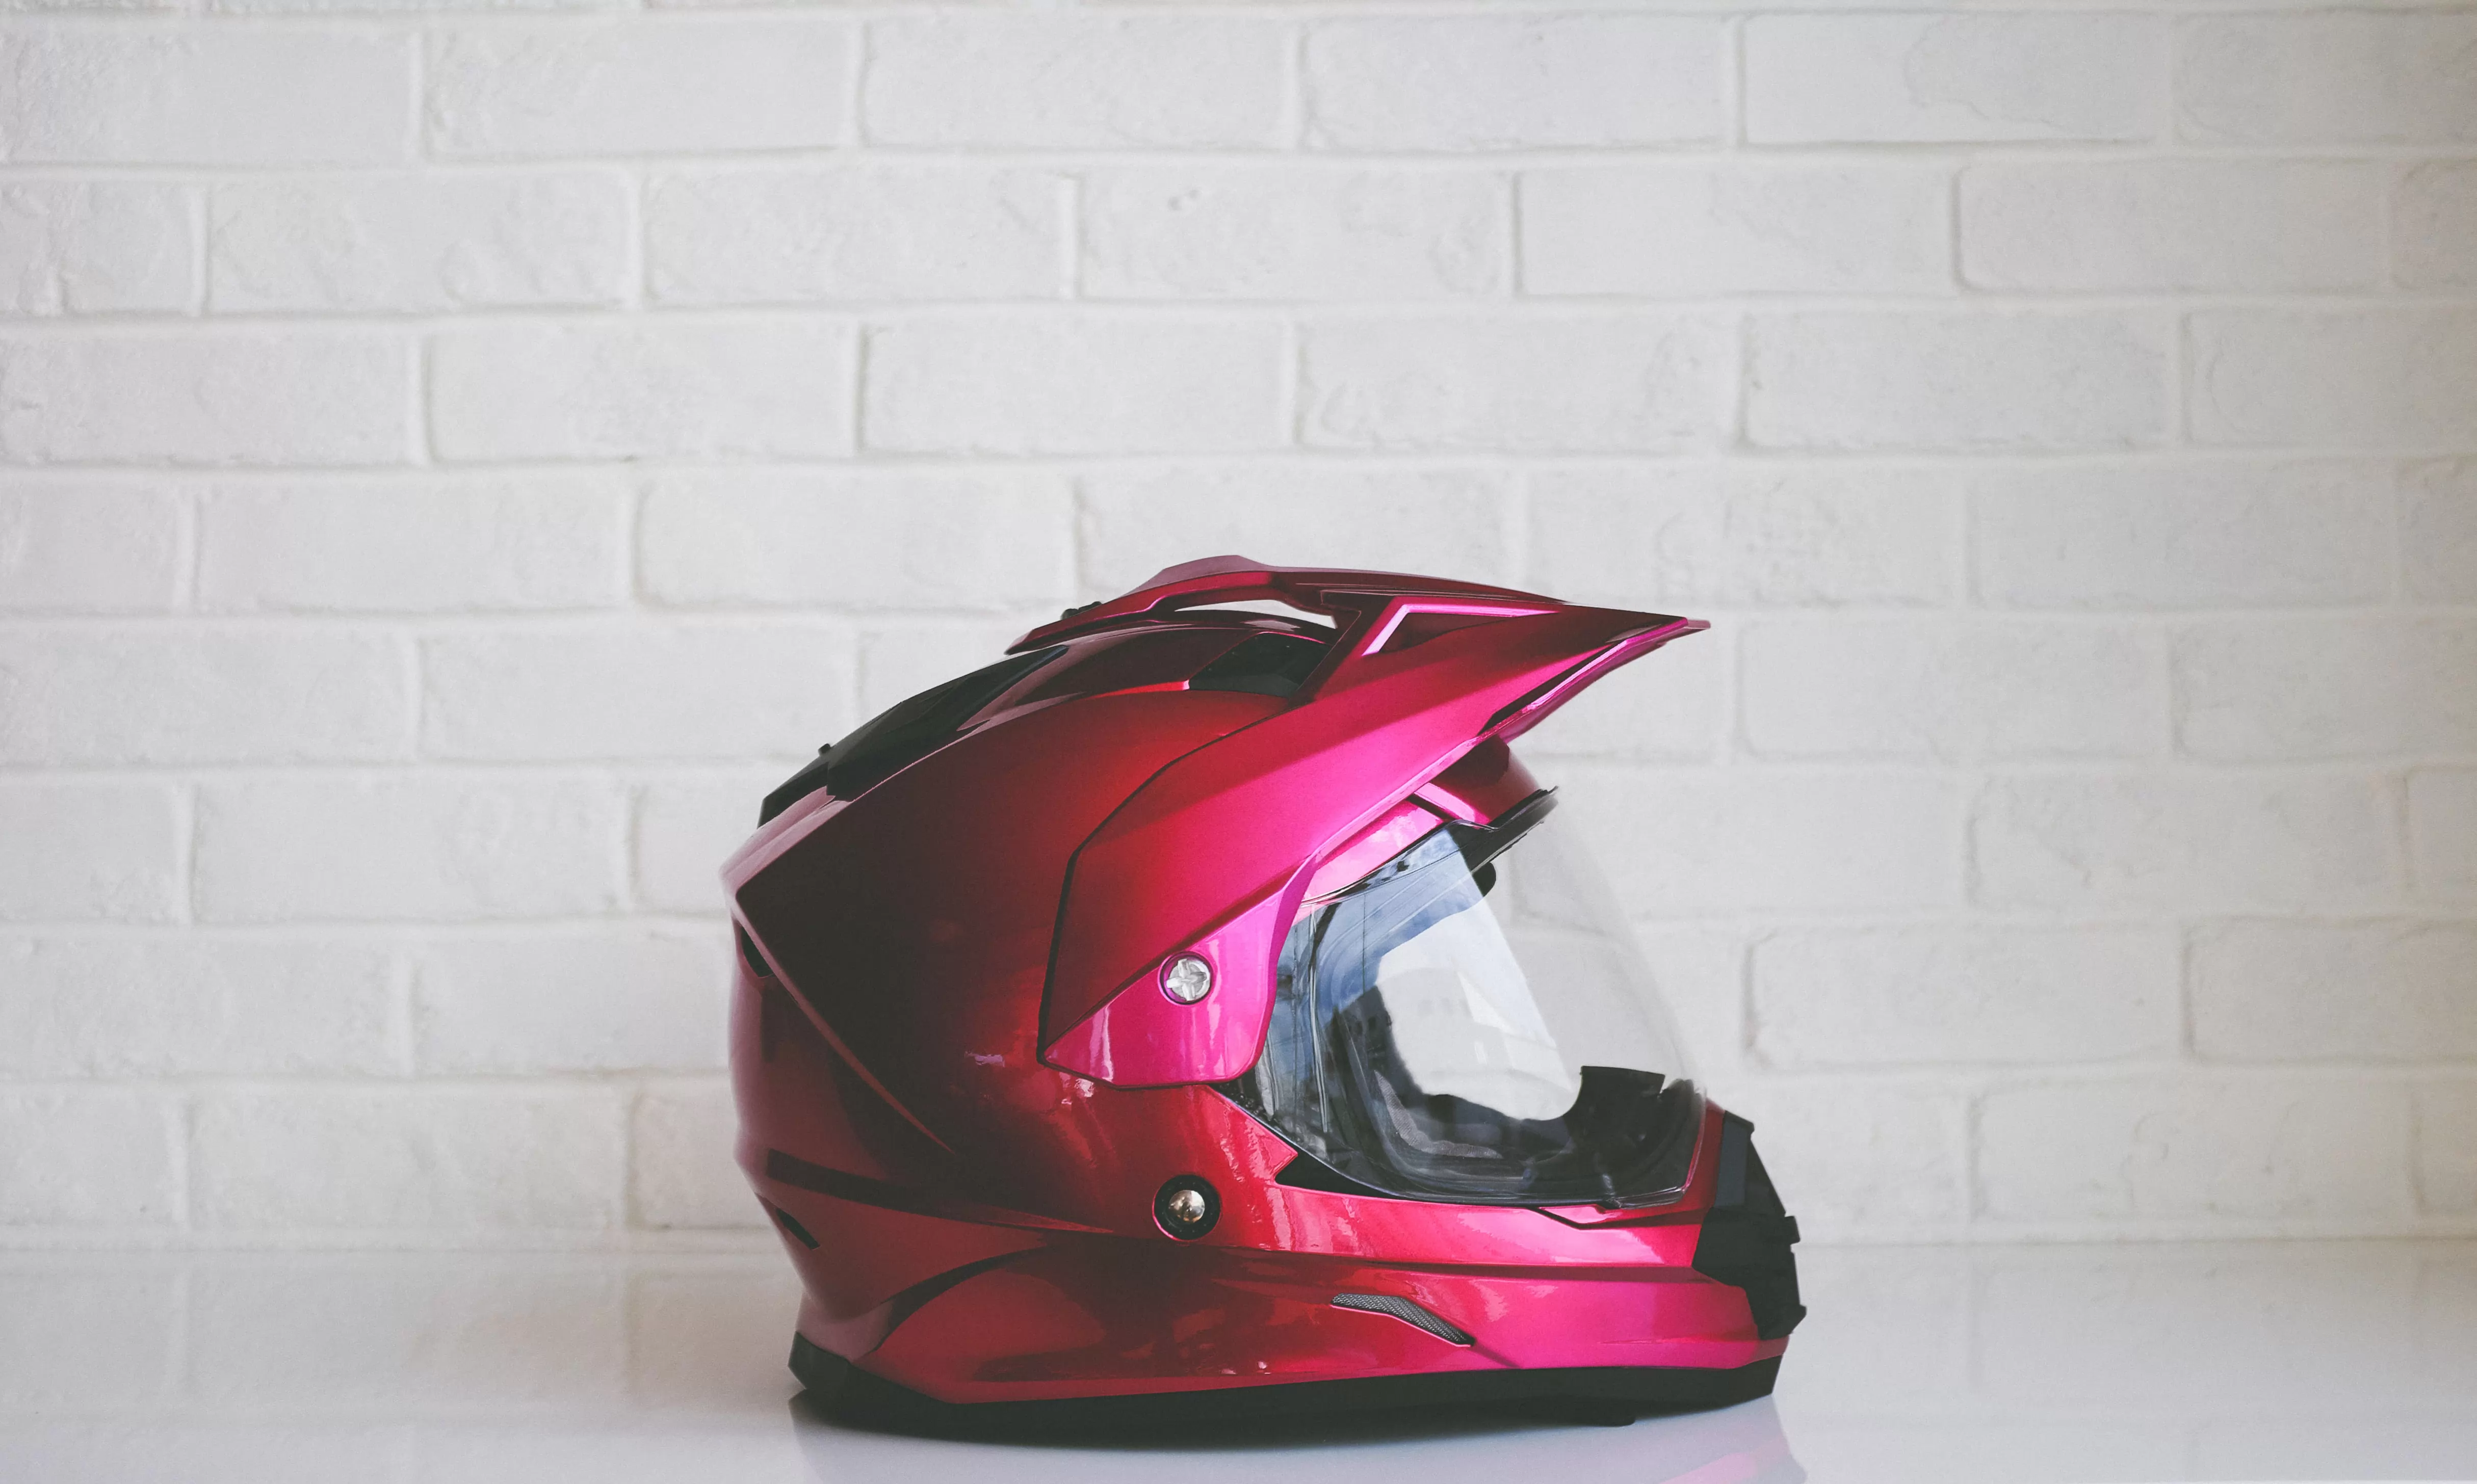 The market for motorcycle helmet